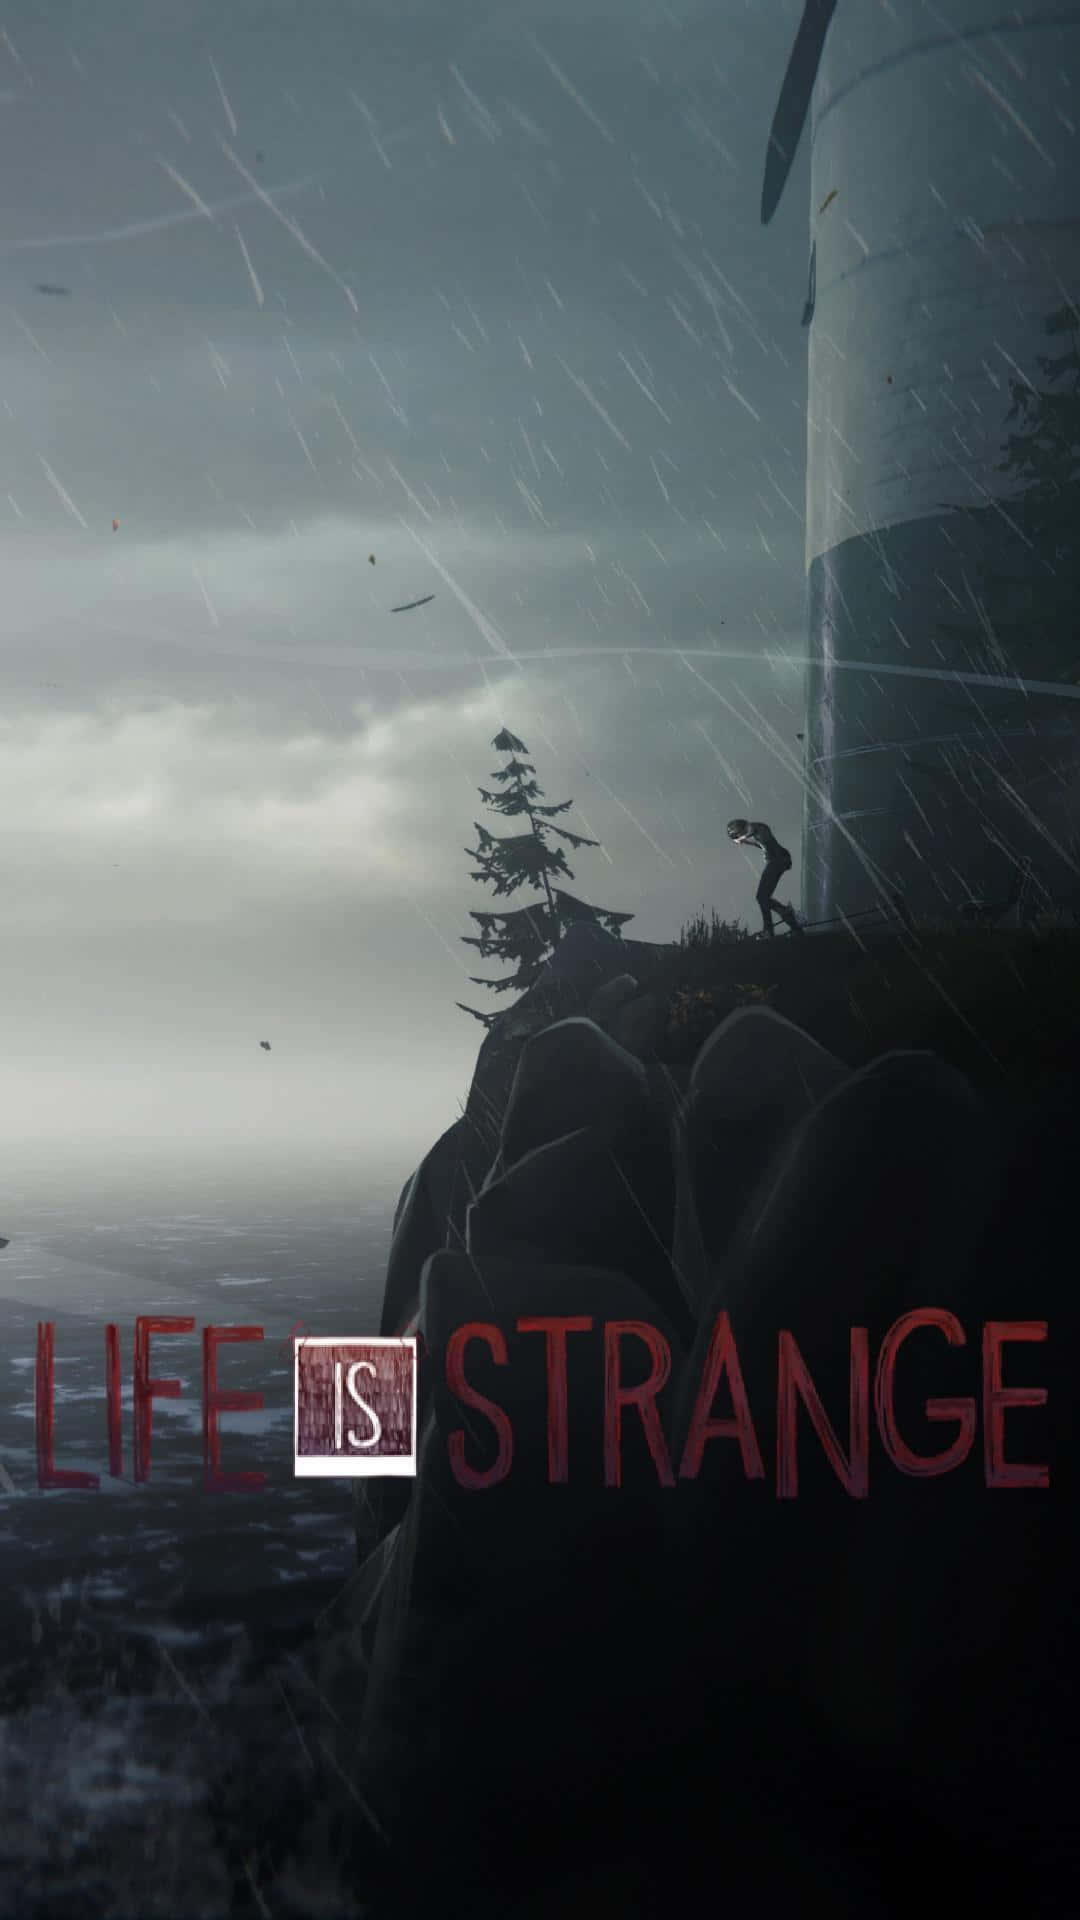 Lifeis Strange Game Artwork Wallpaper